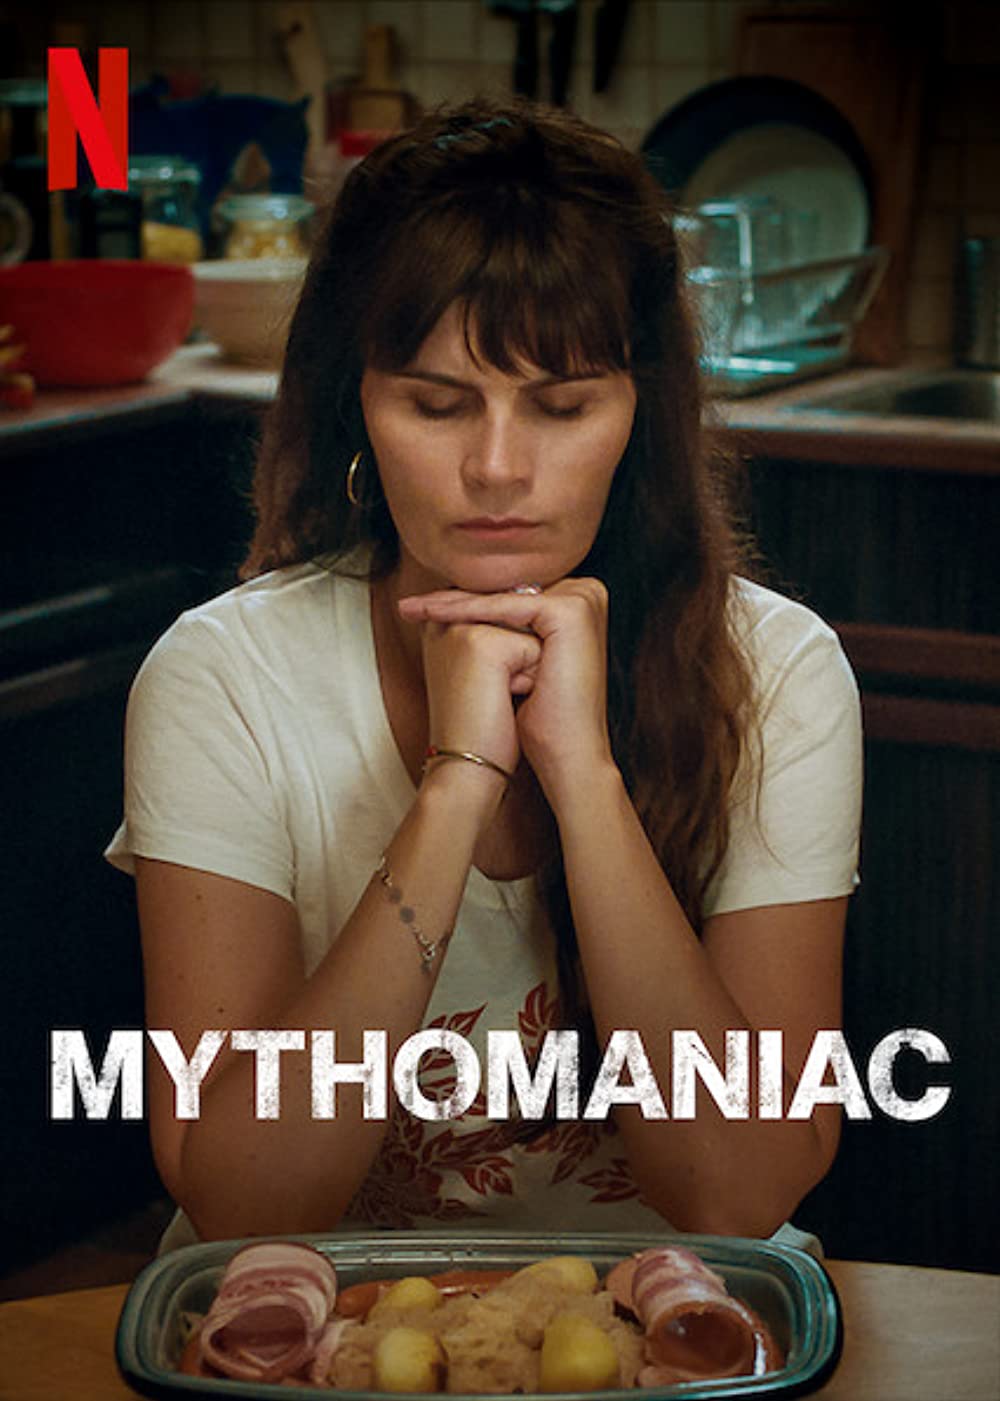 Is Mythomaniac on Netflix